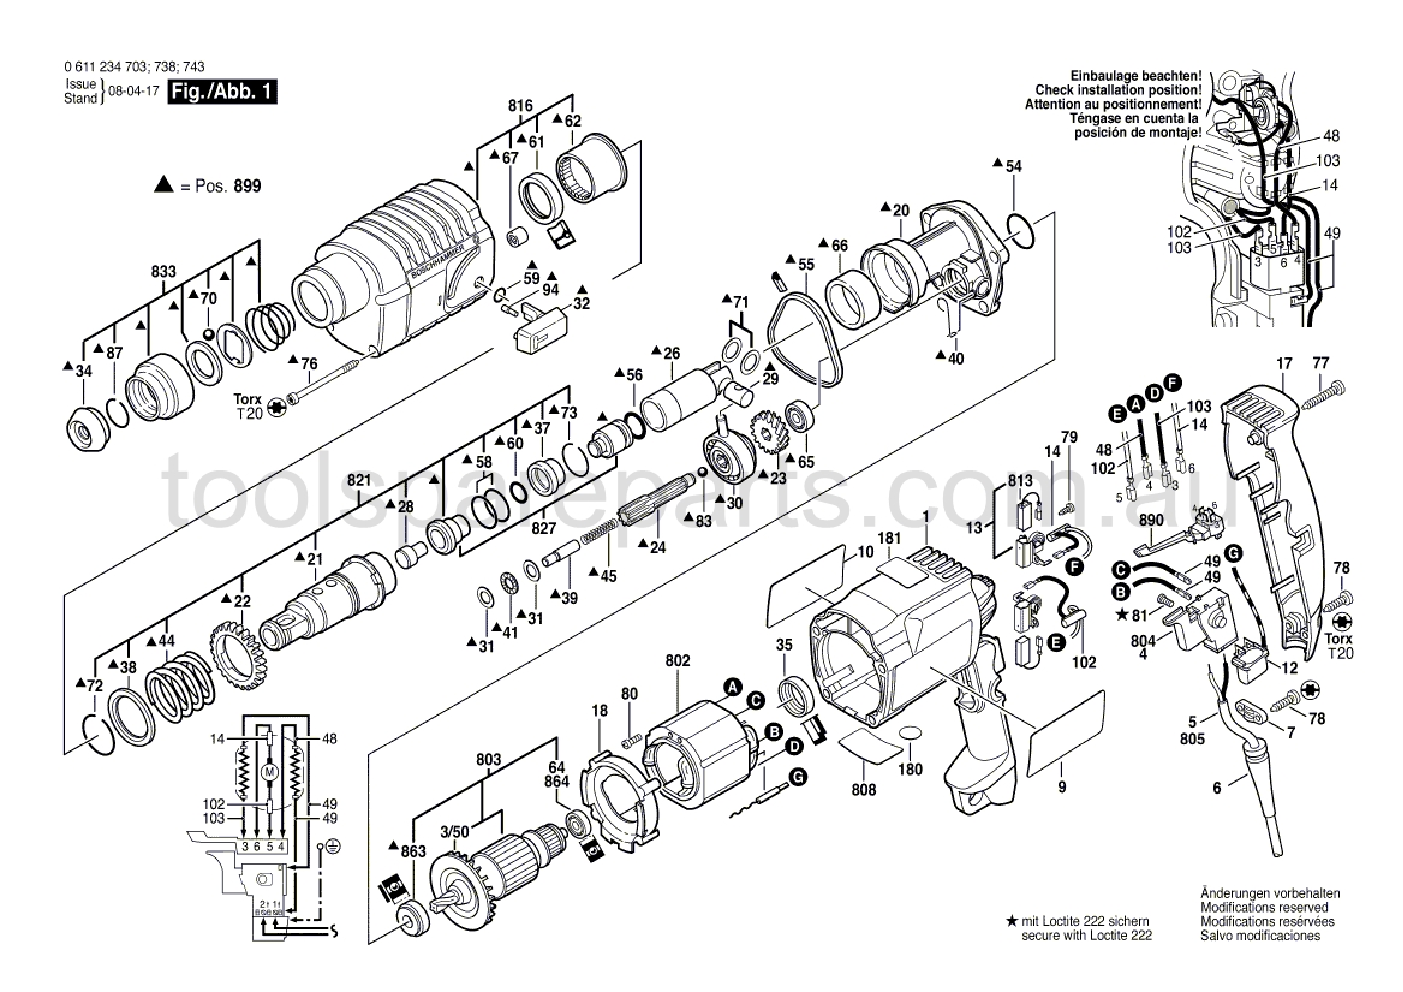 Bosch GBH 2-20 SRE 0611234737  Diagram 1